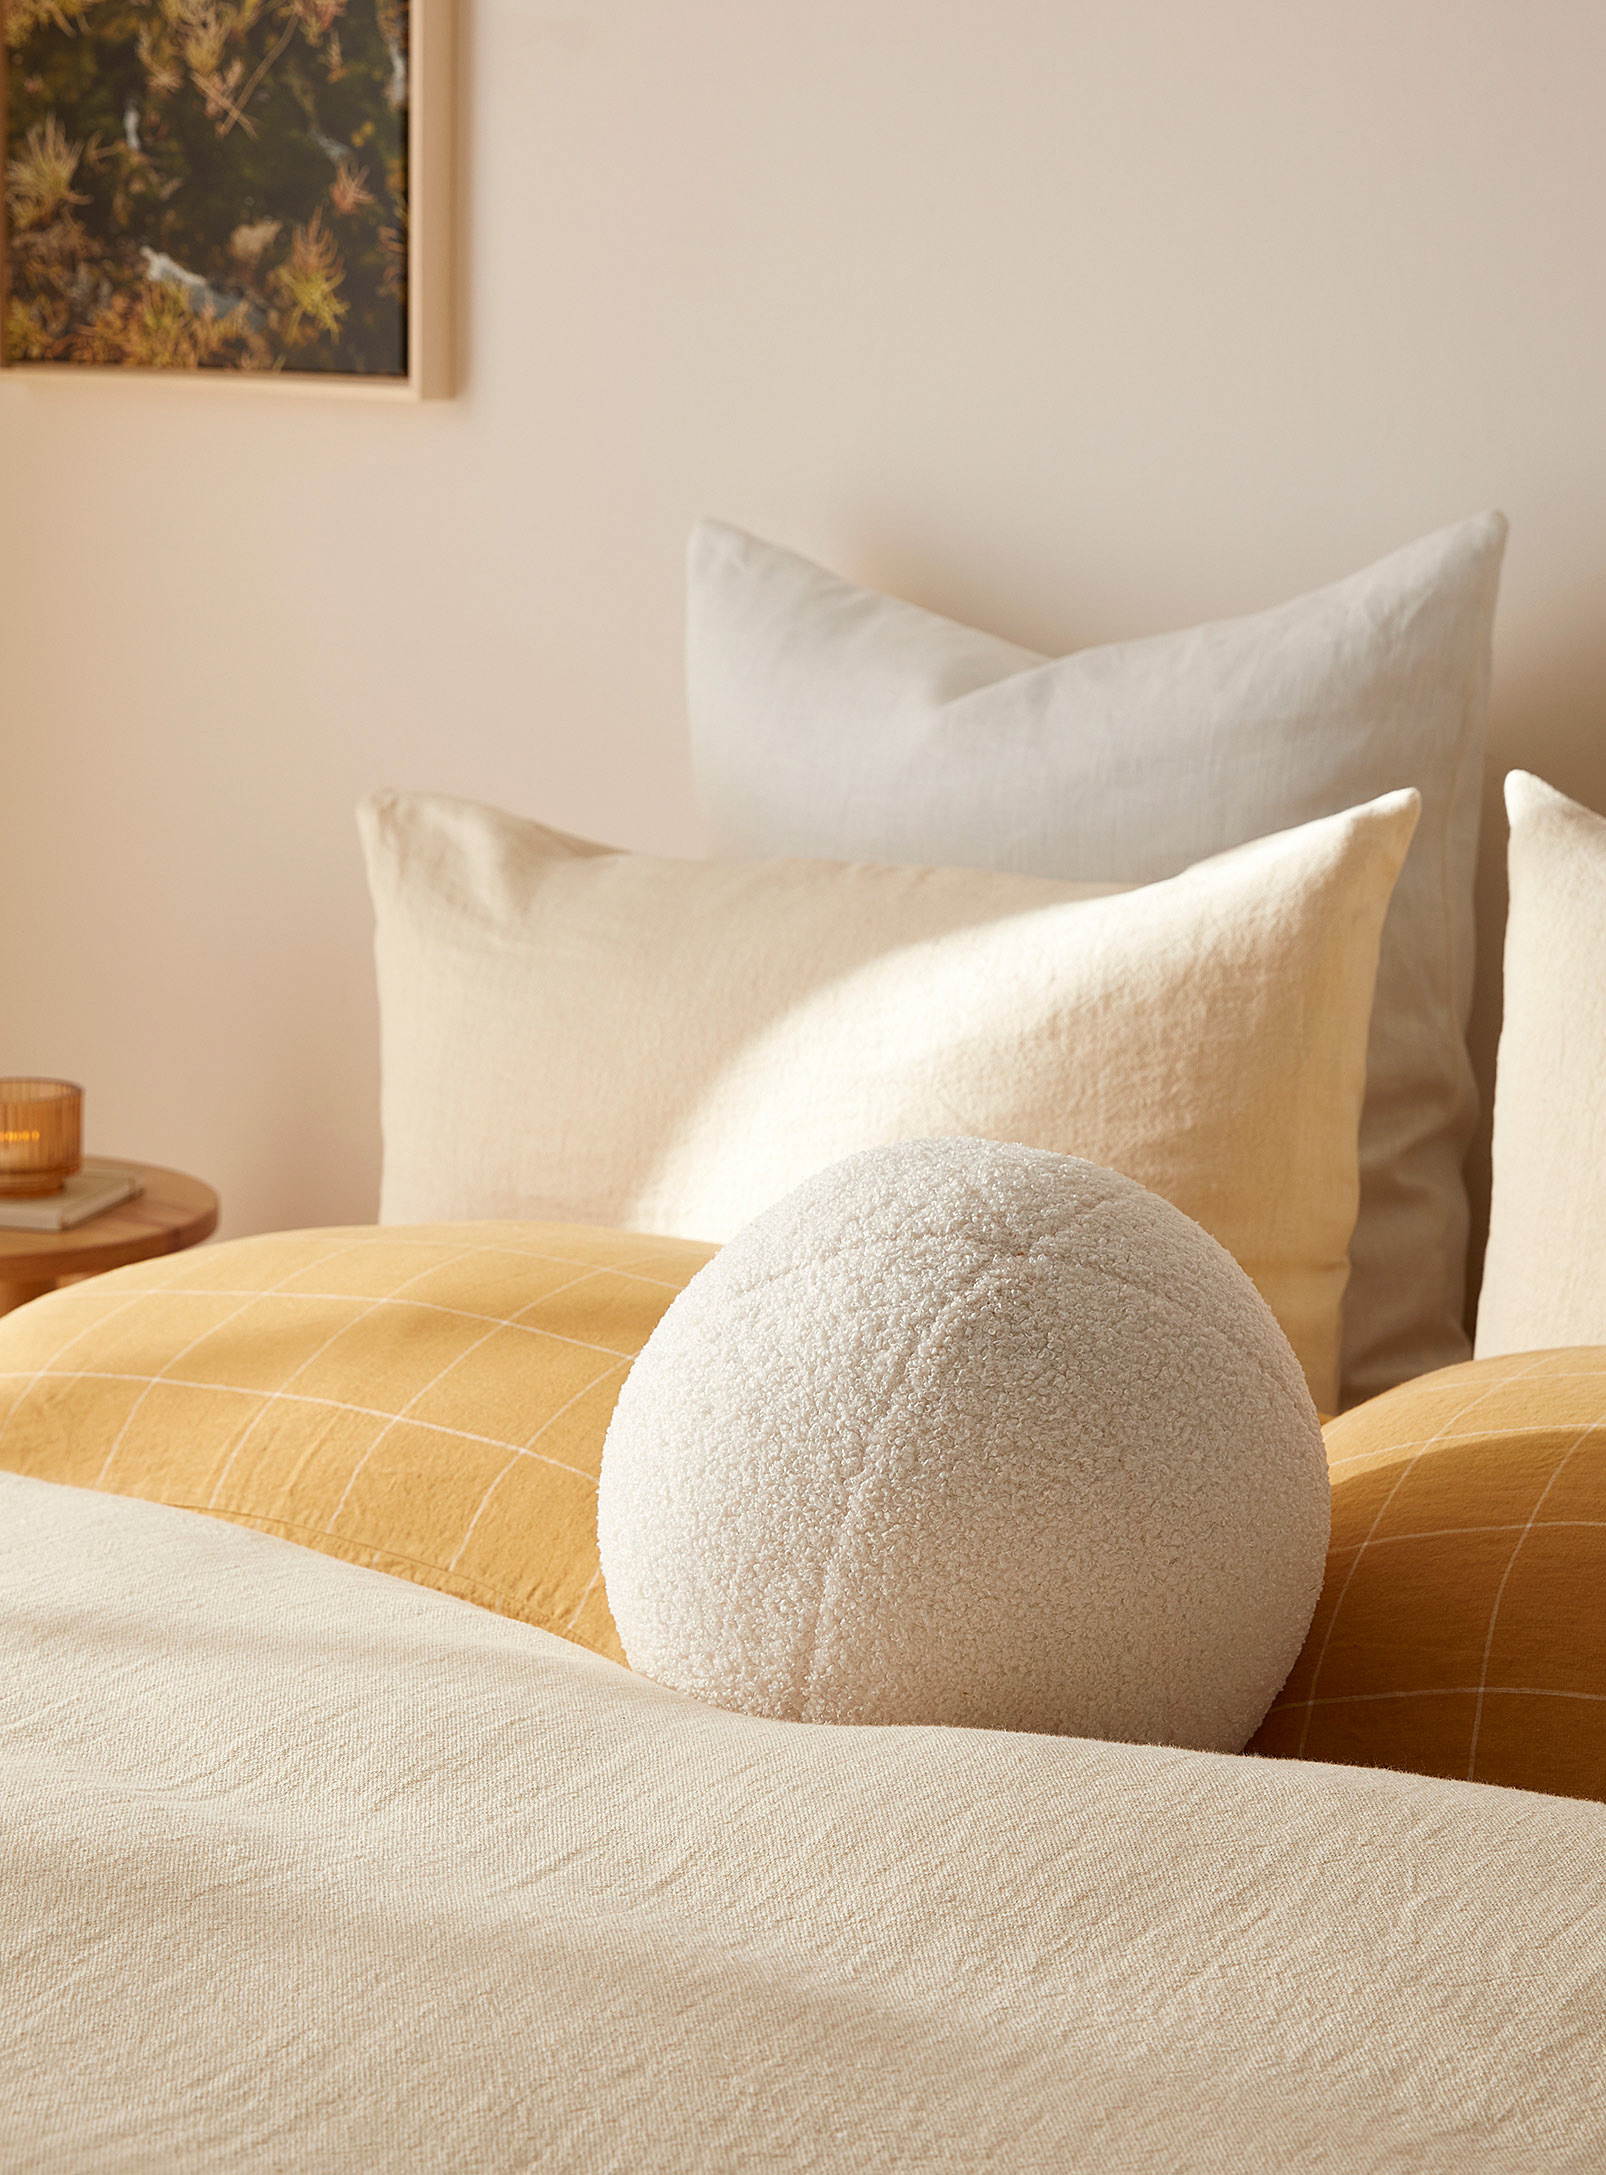 Simons Maison Ball-shaped Sherpa Cushion 35 Cm In Diameter In Ivory White